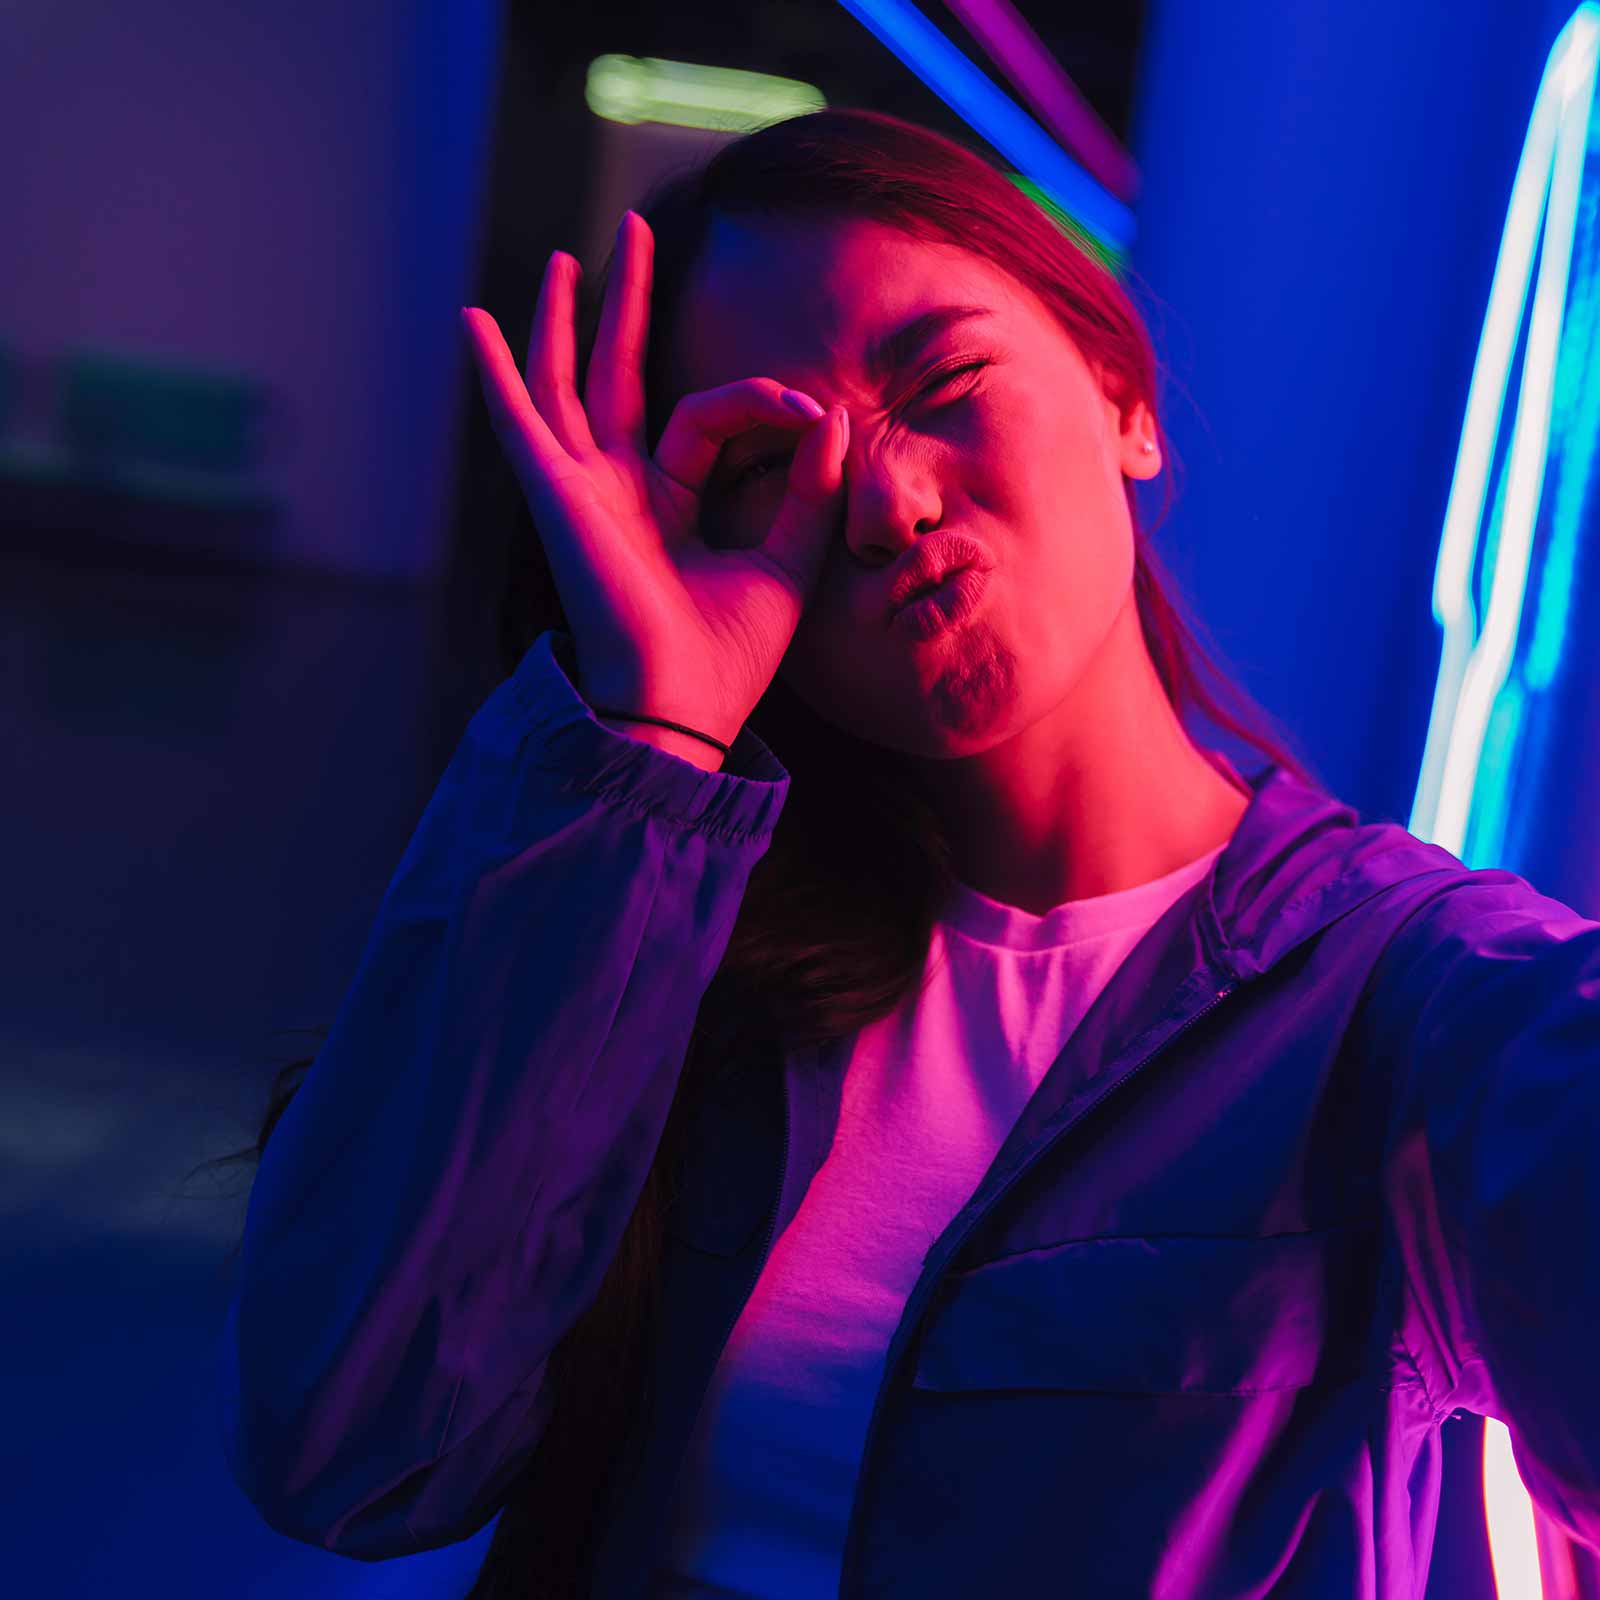 Teen girl posing for a selfie in front of neon lights